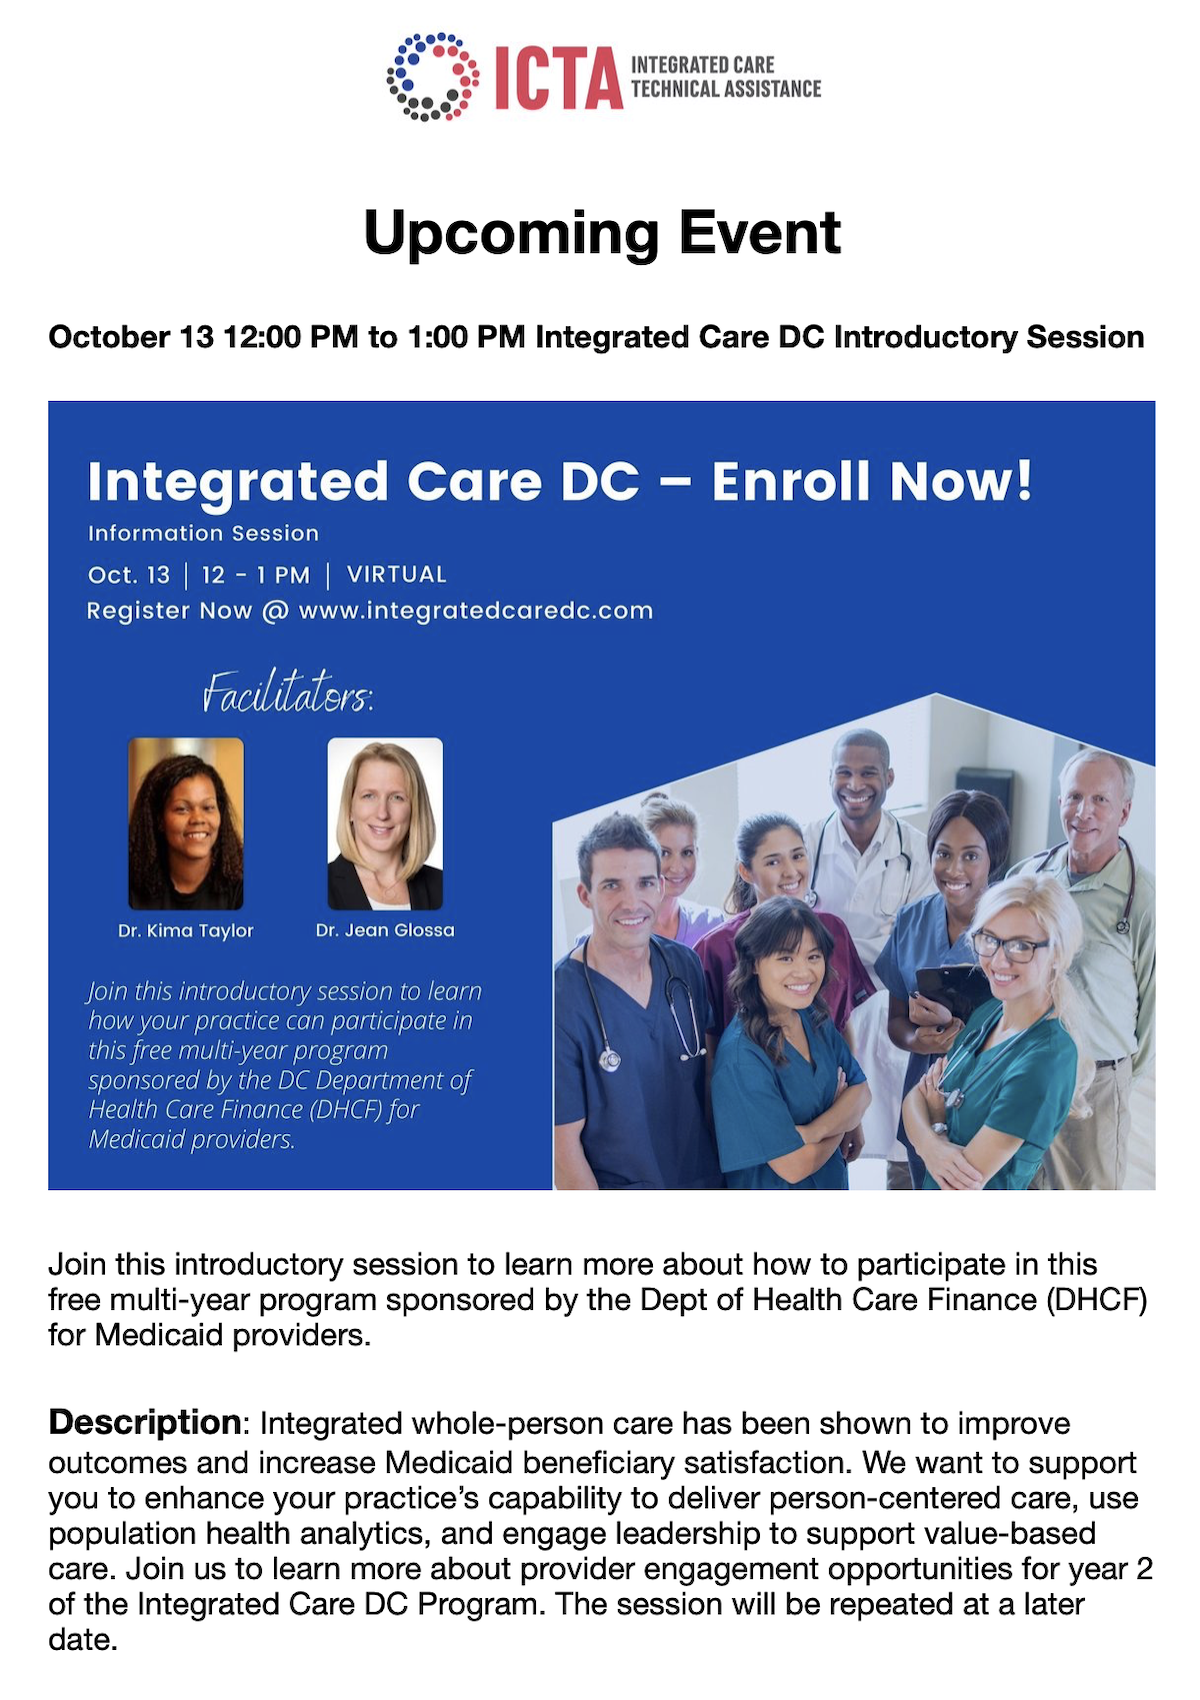 Integrated Care DC September Newsletter Image